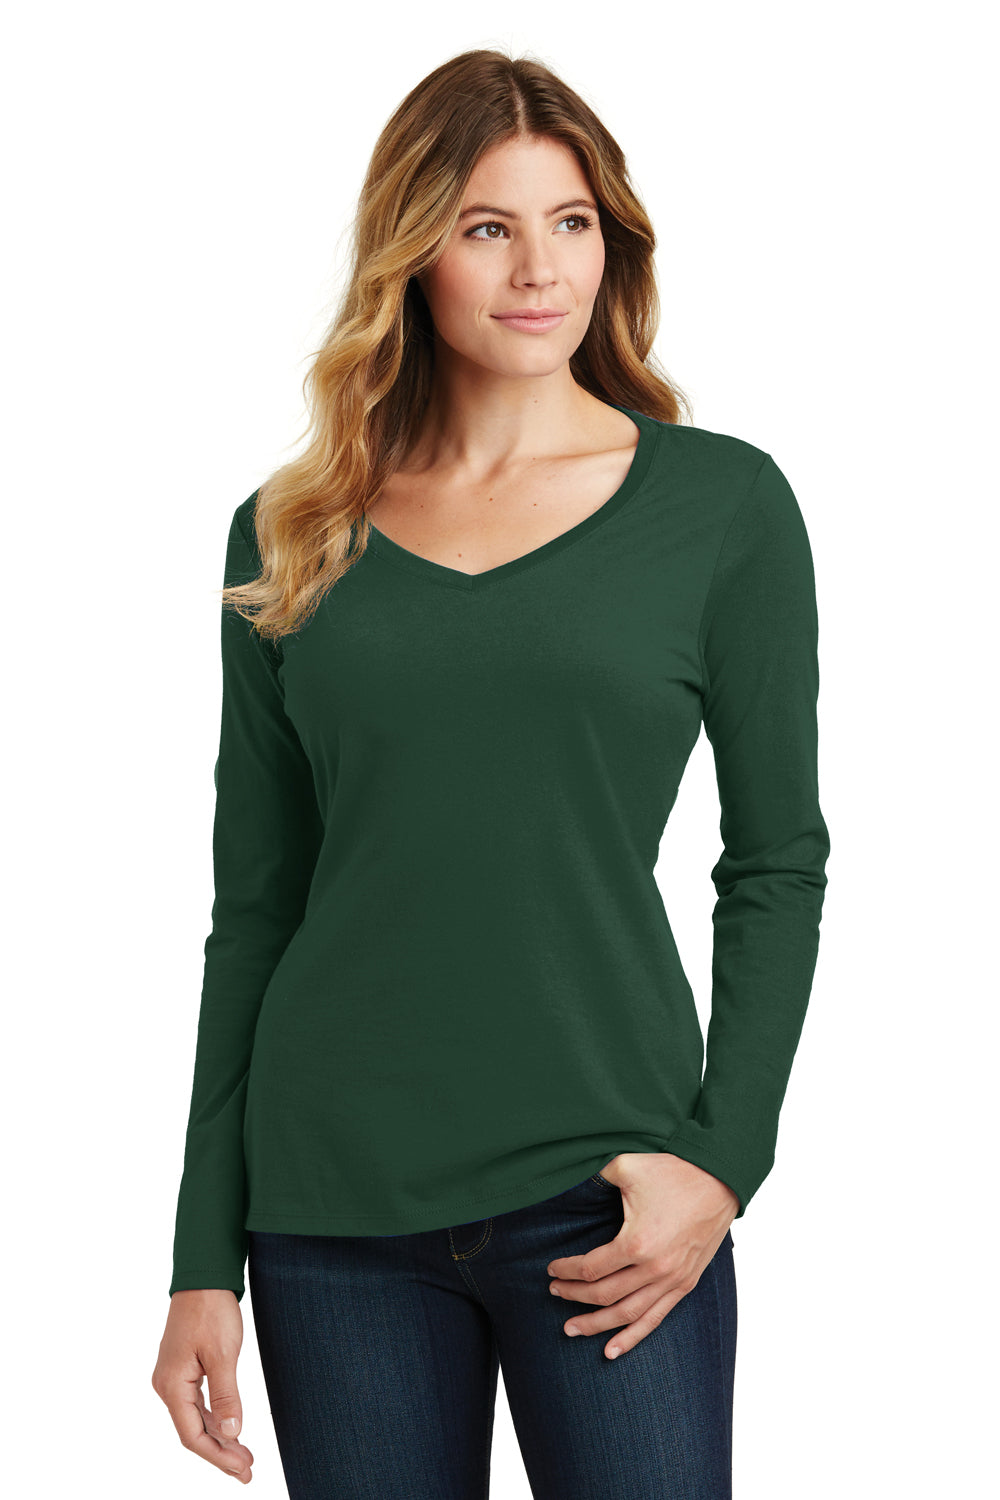 Port & Company LPC450VLS Womens Fan Favorite Long Sleeve V-Neck T-Shirt Forest Green Front